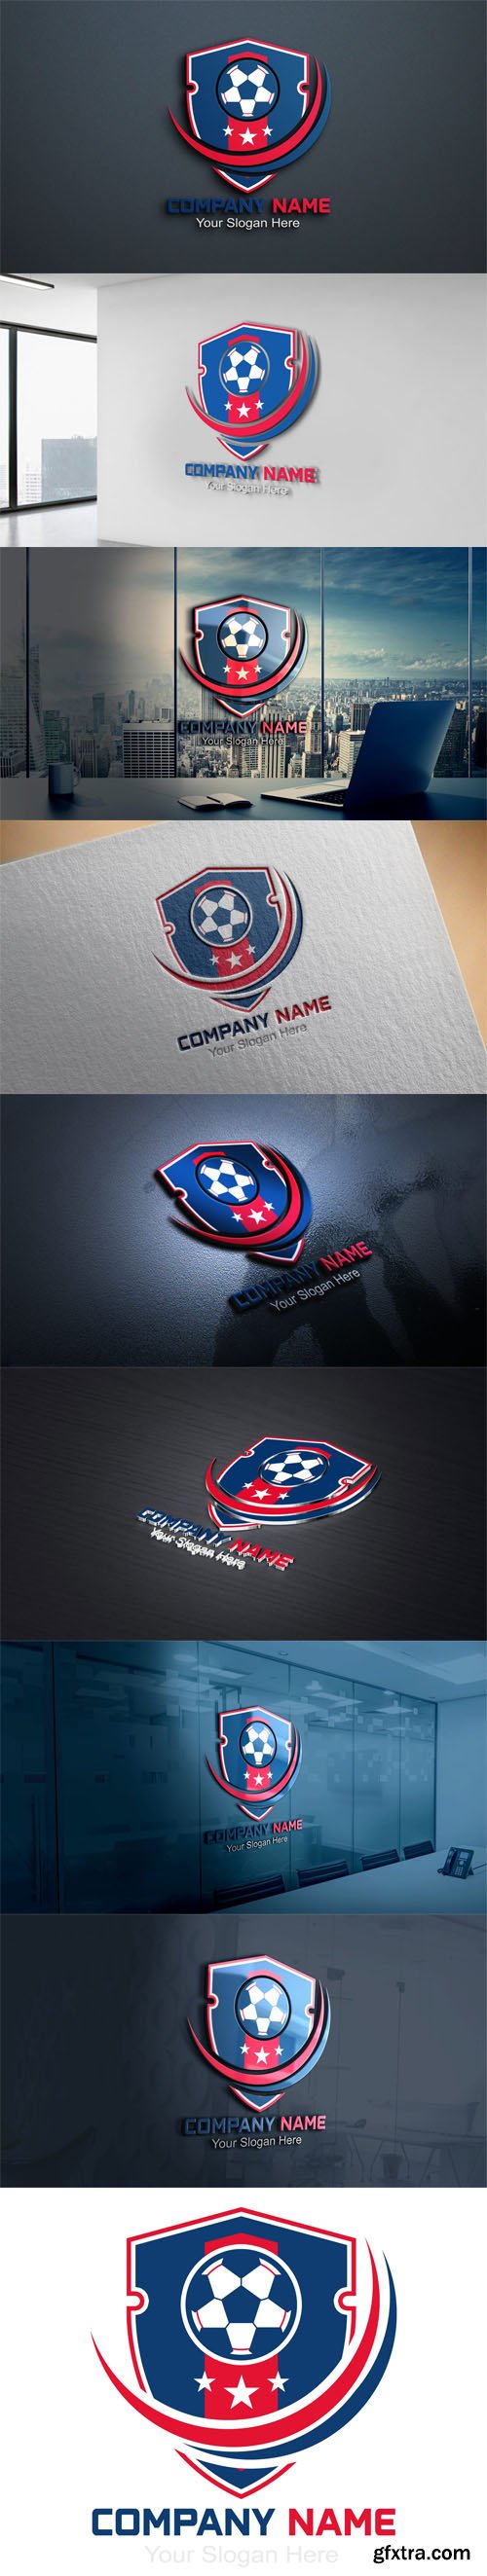 Sport Badge Logo Design PSD Template